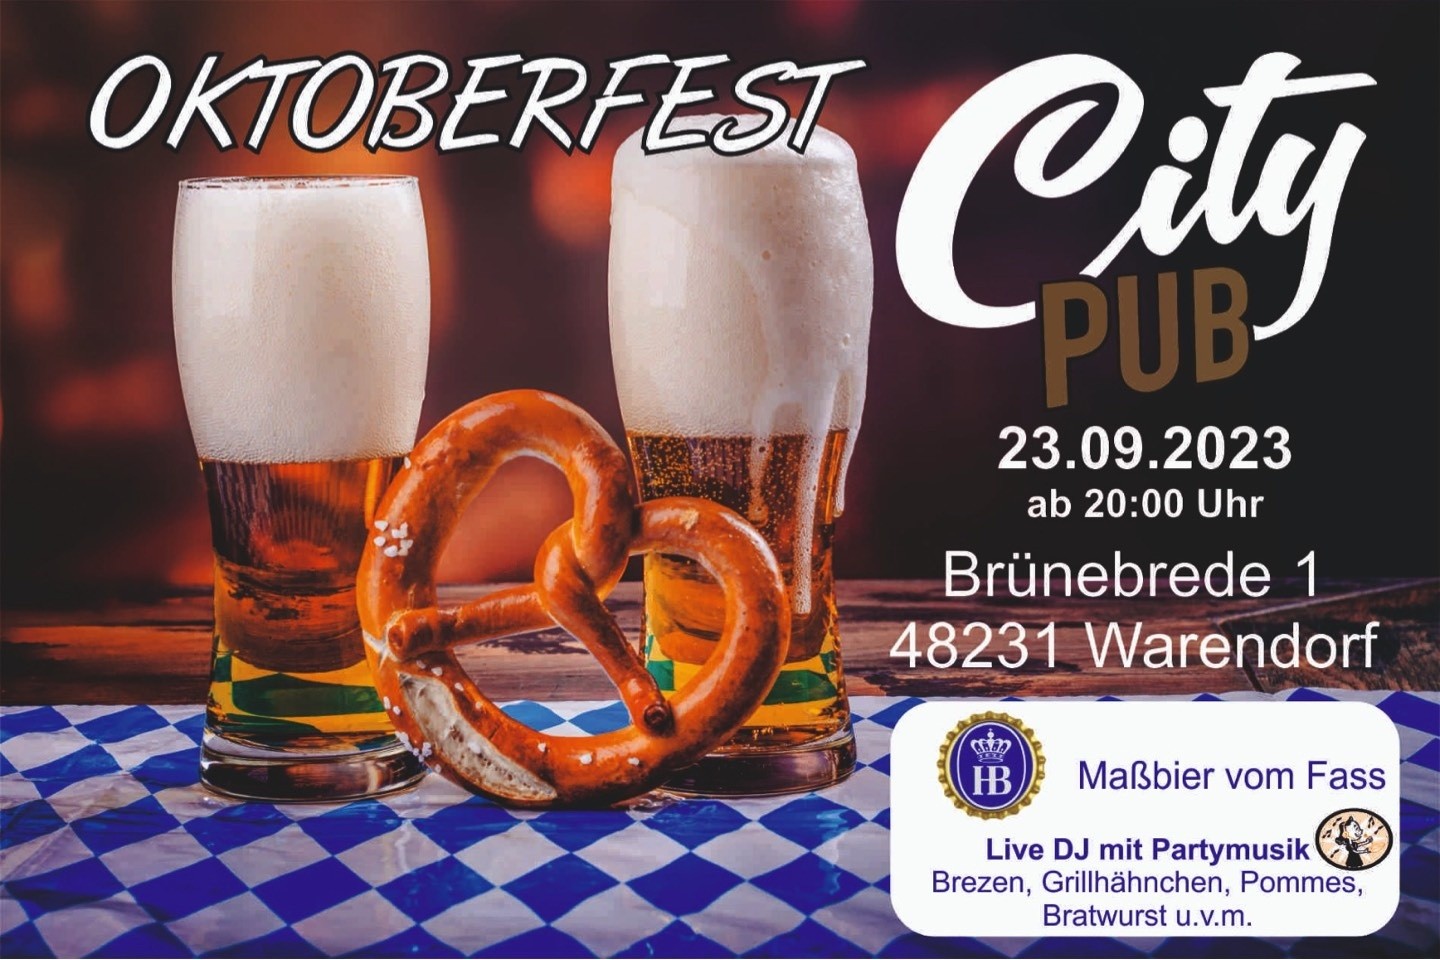 Oktoberfest,Warendorf,Oktoberfestbier,Party,DJ,Eintritt frei,City Pub,